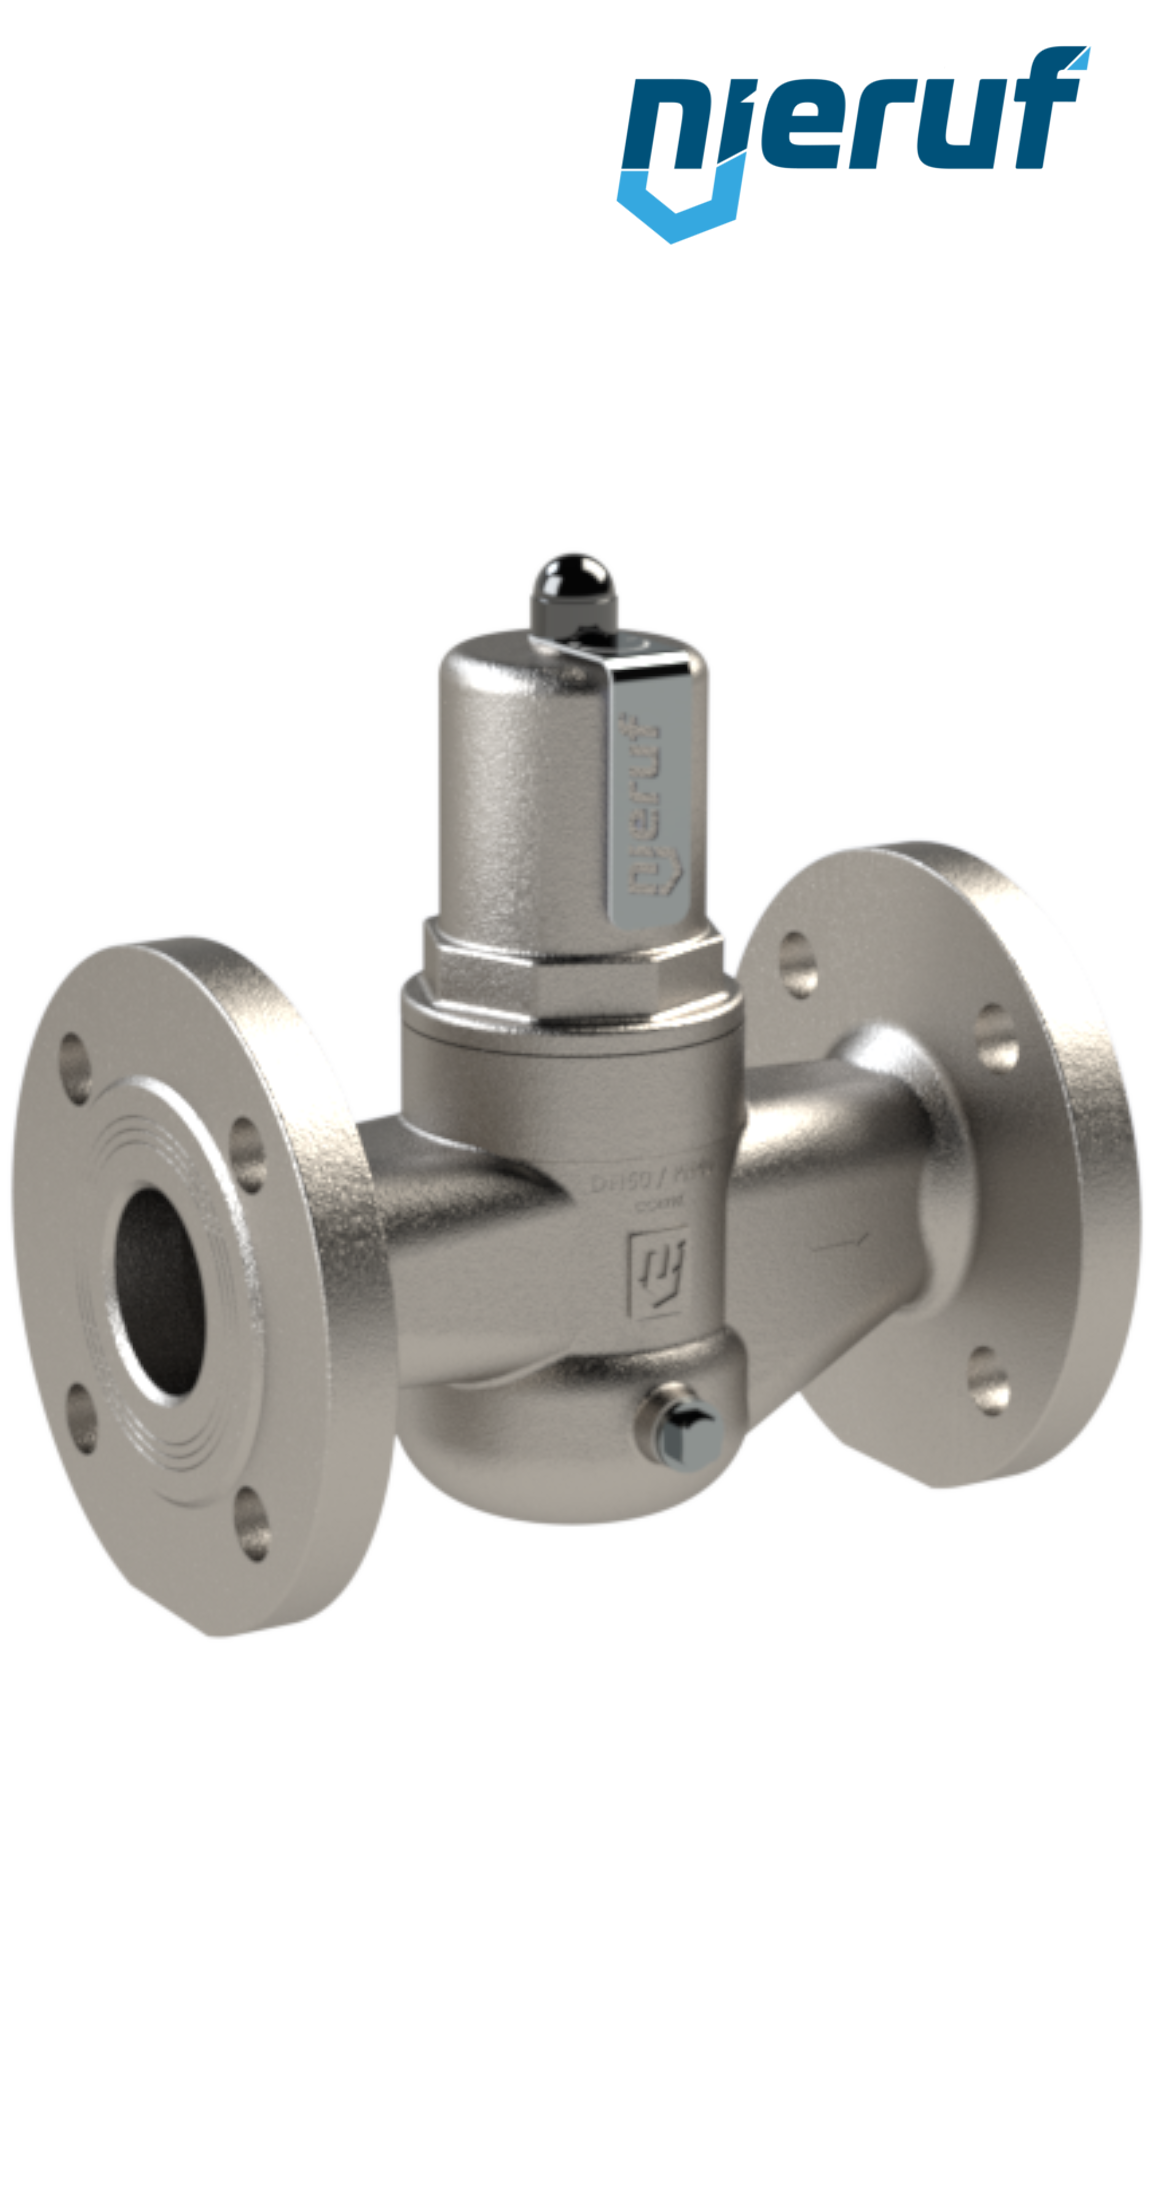 Flange-pressure reducing valve DN 15 PN40 DM08 stainless steel FKM 0.5 - 2.0 bar